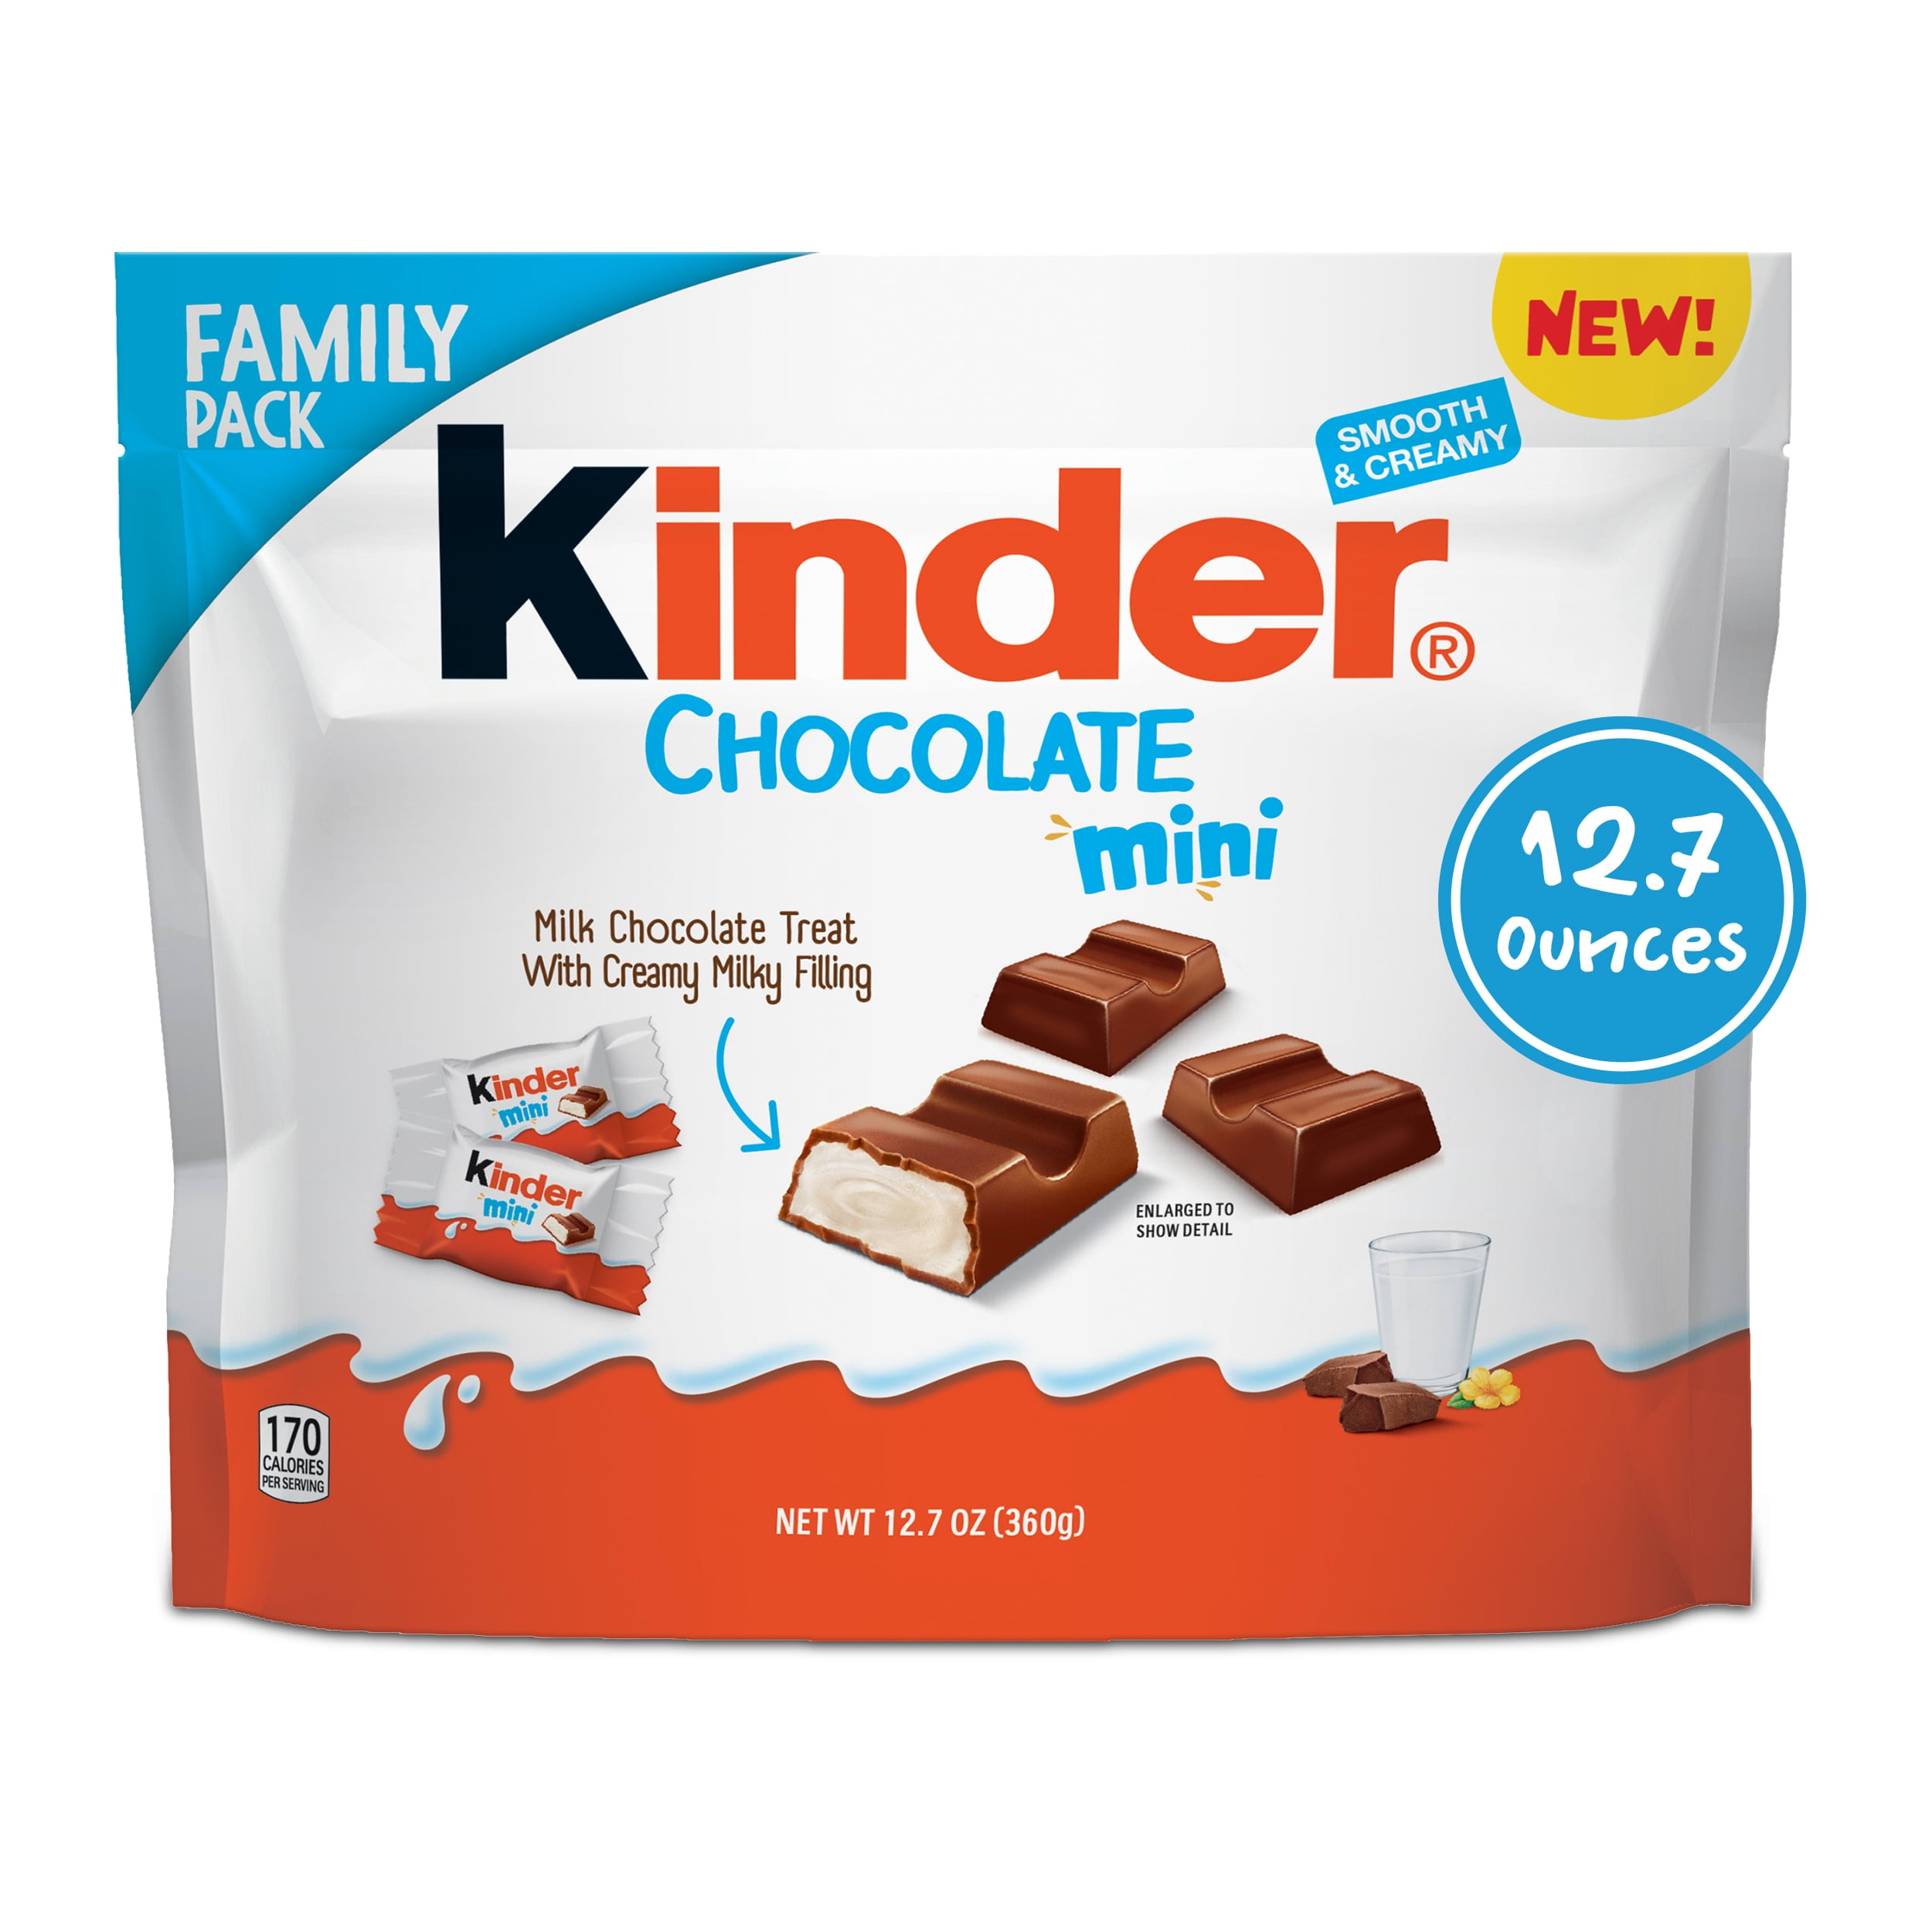 Kinder Chocolate Mini, Milk Chocolate Bar, Easter Basket Stuffers